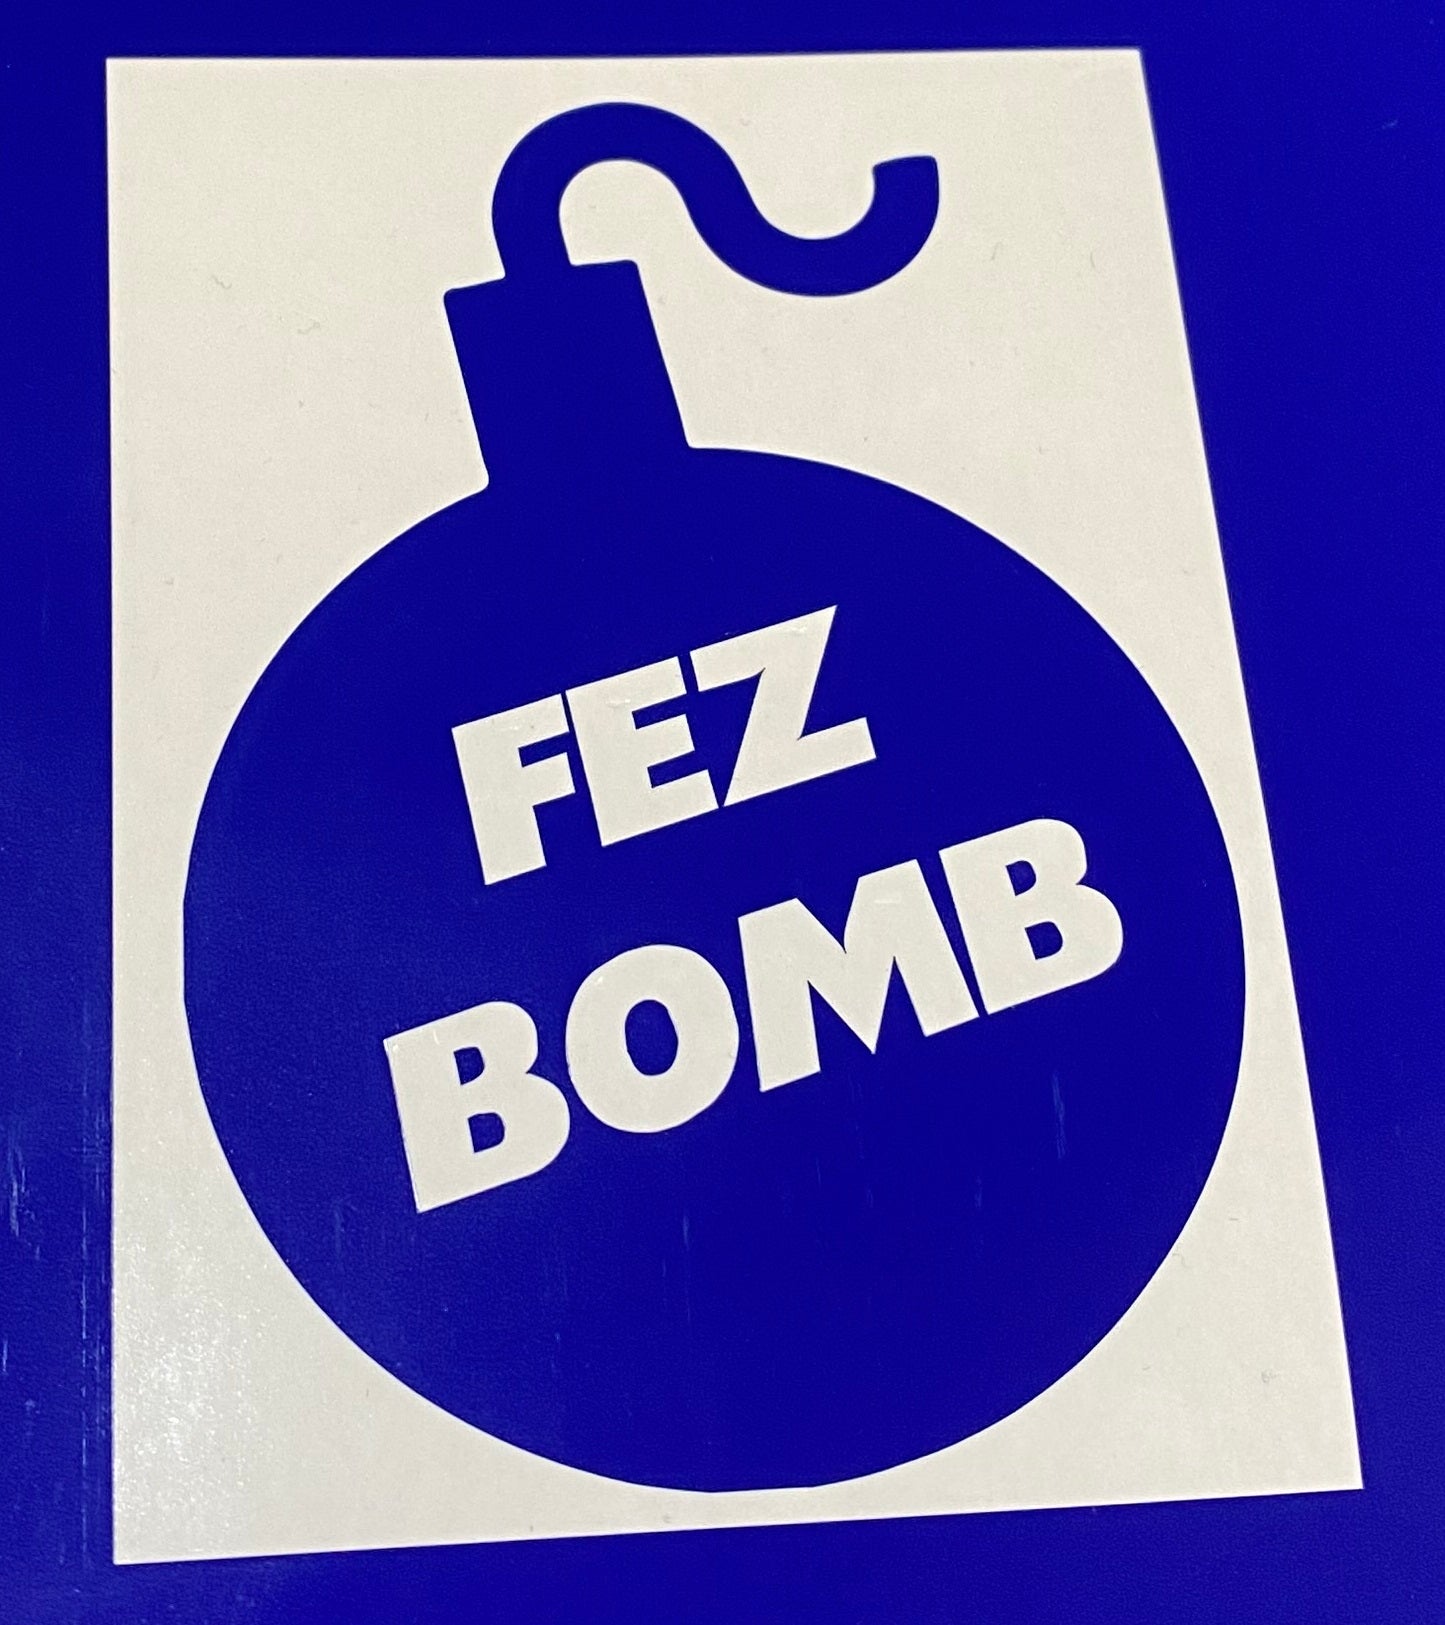 Fez Bomb Vinyl Sticker